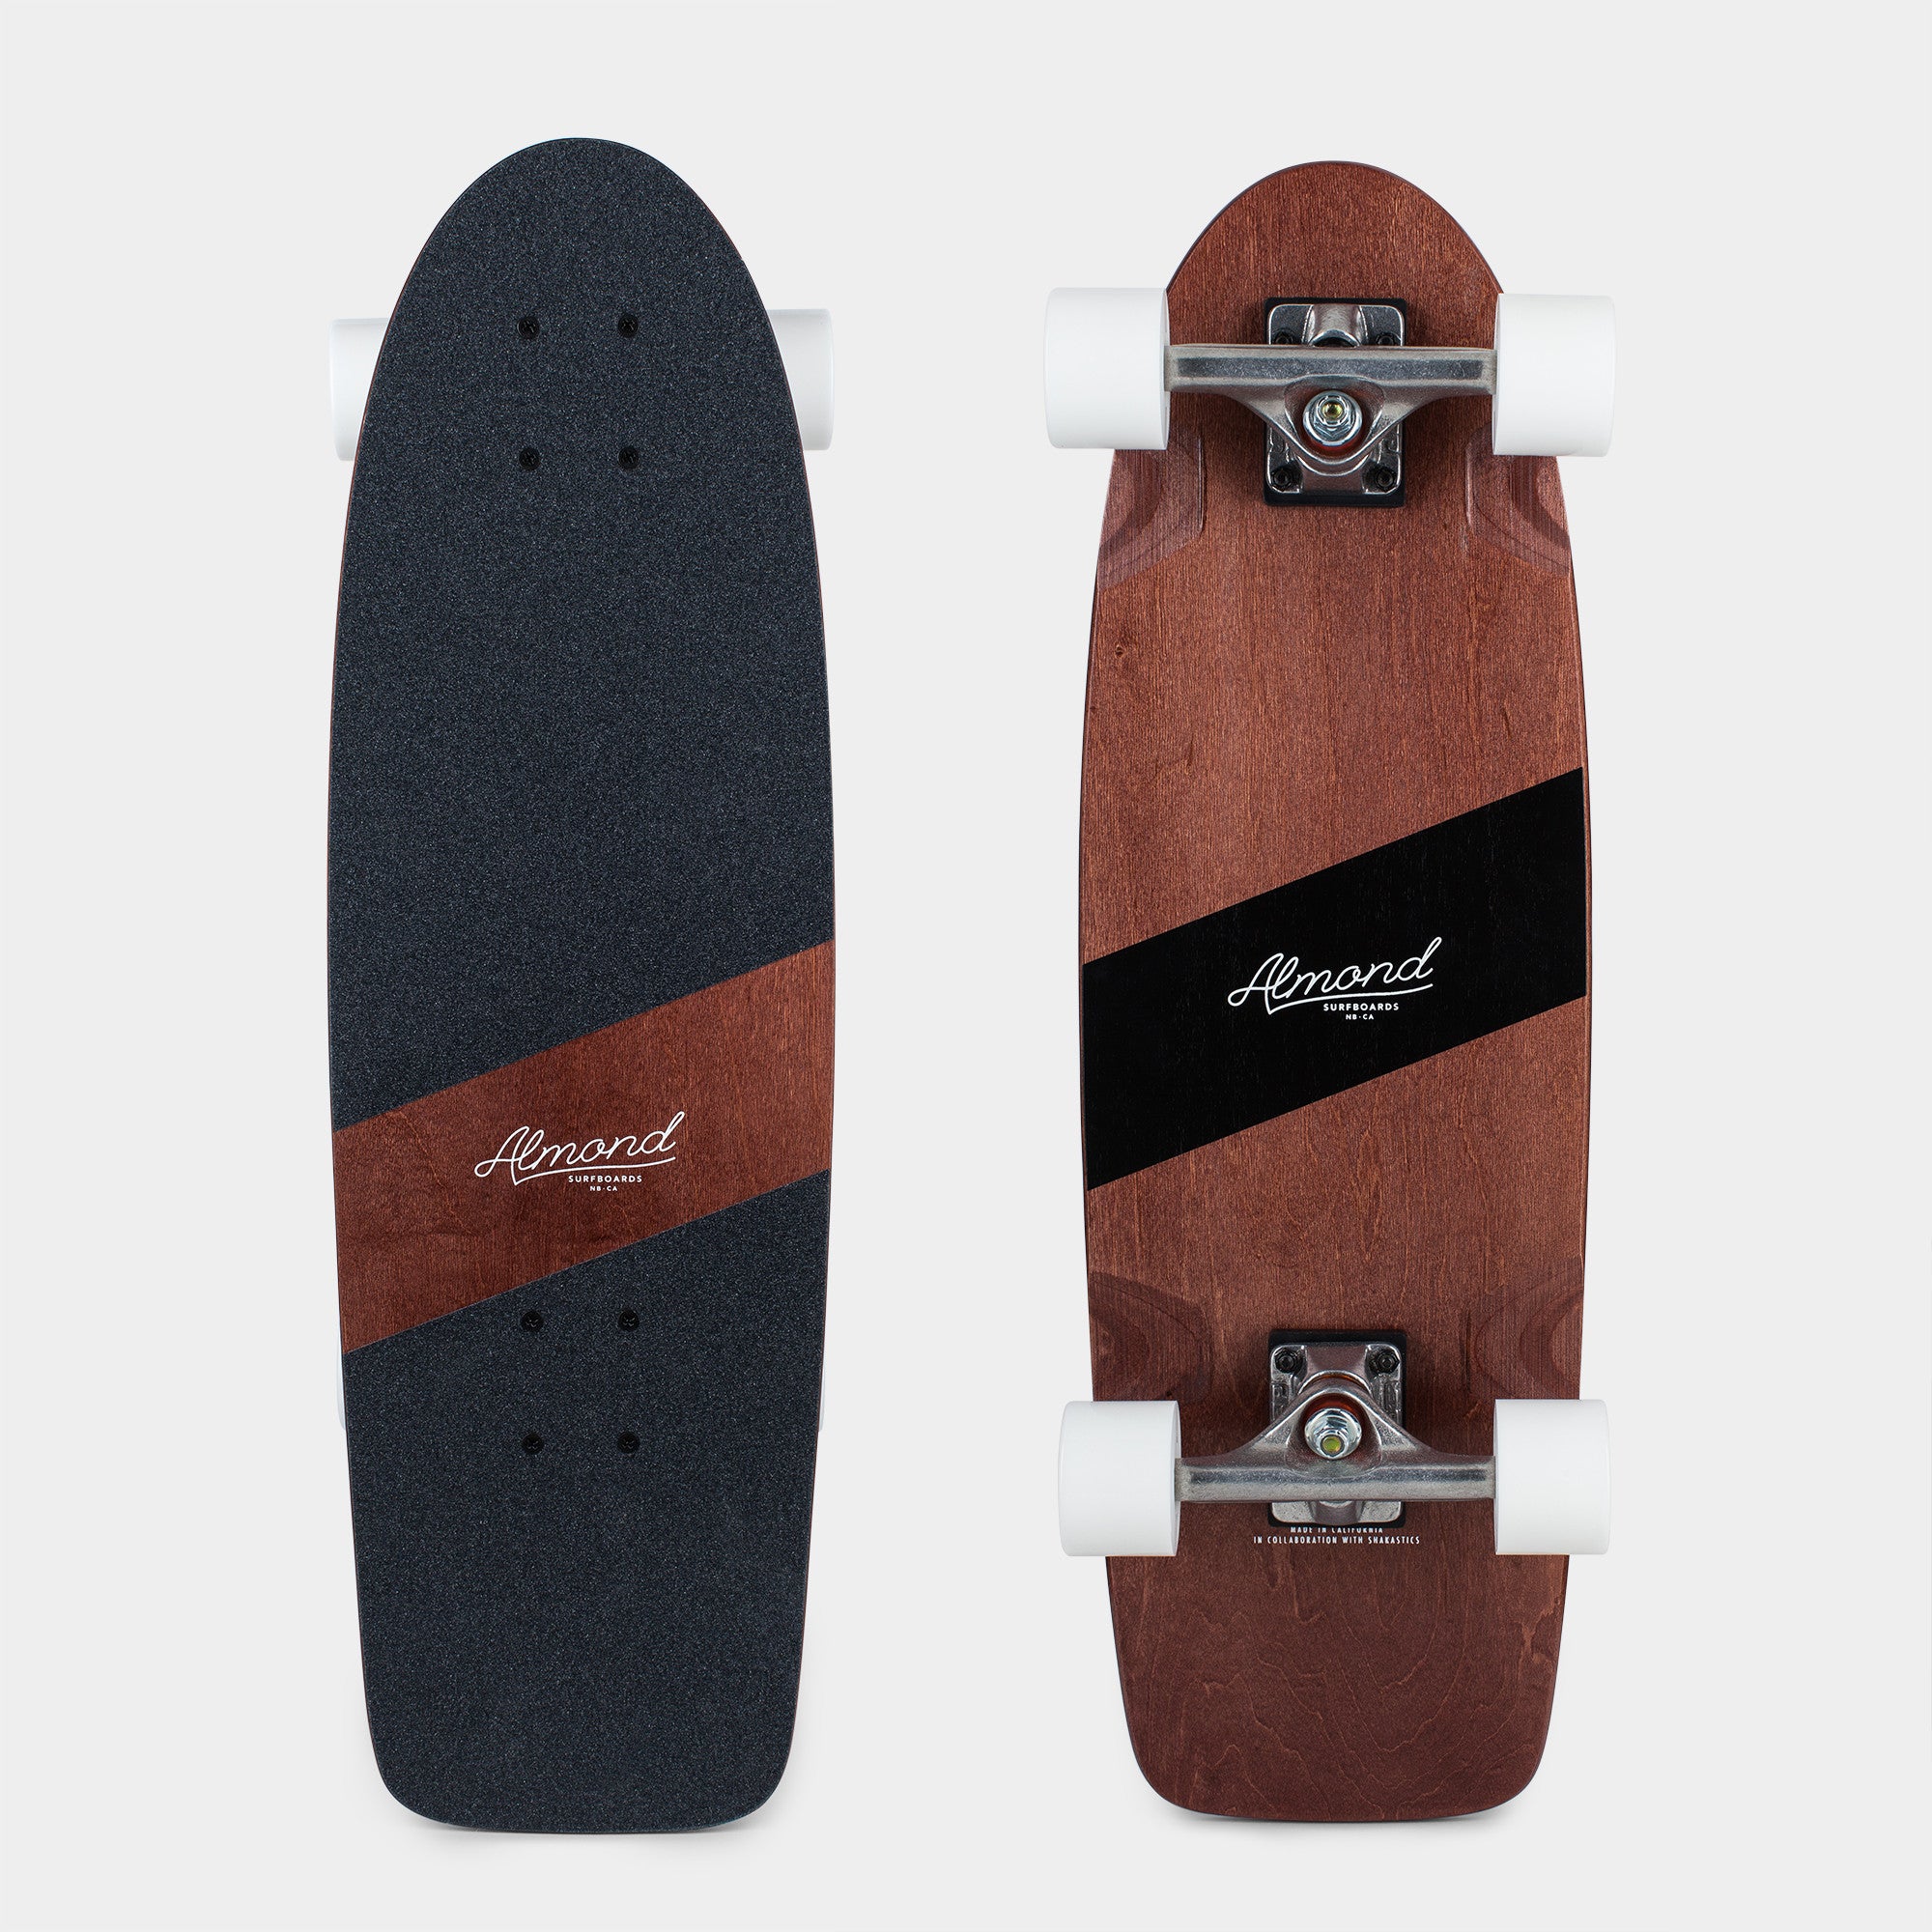 Almond x Shakastics Limited-Edition Skateboard